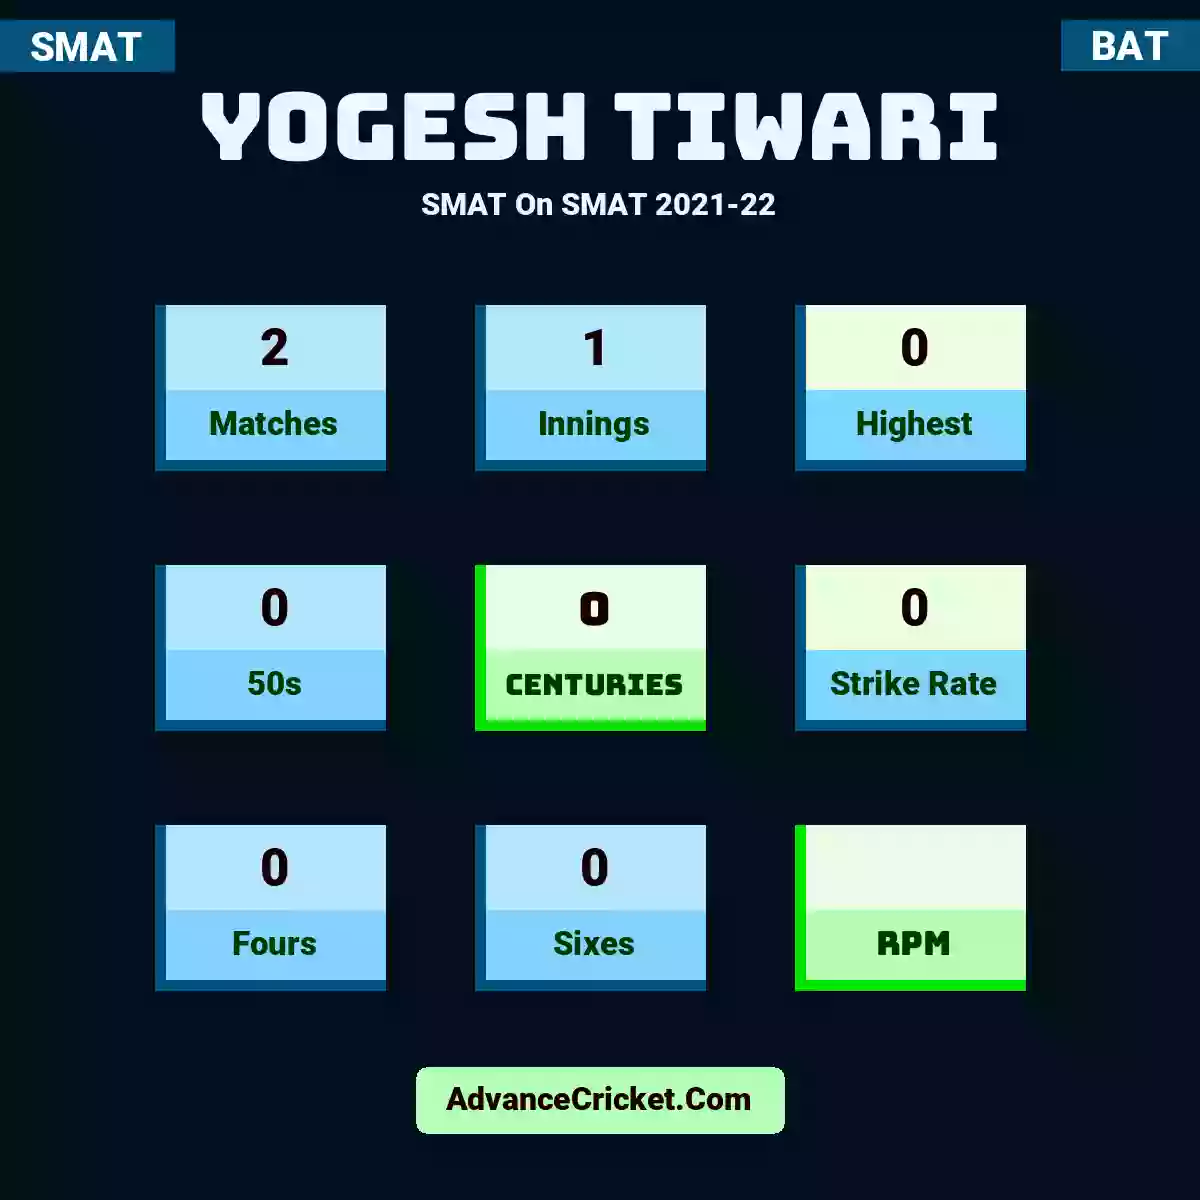 Yogesh Tiwari SMAT  On SMAT 2021-22, Yogesh Tiwari played 2 matches, scored 0 runs as highest, 0 half-centuries, and 0 centuries, with a strike rate of 0. Y.Tiwari hit 0 fours and 0 sixes.